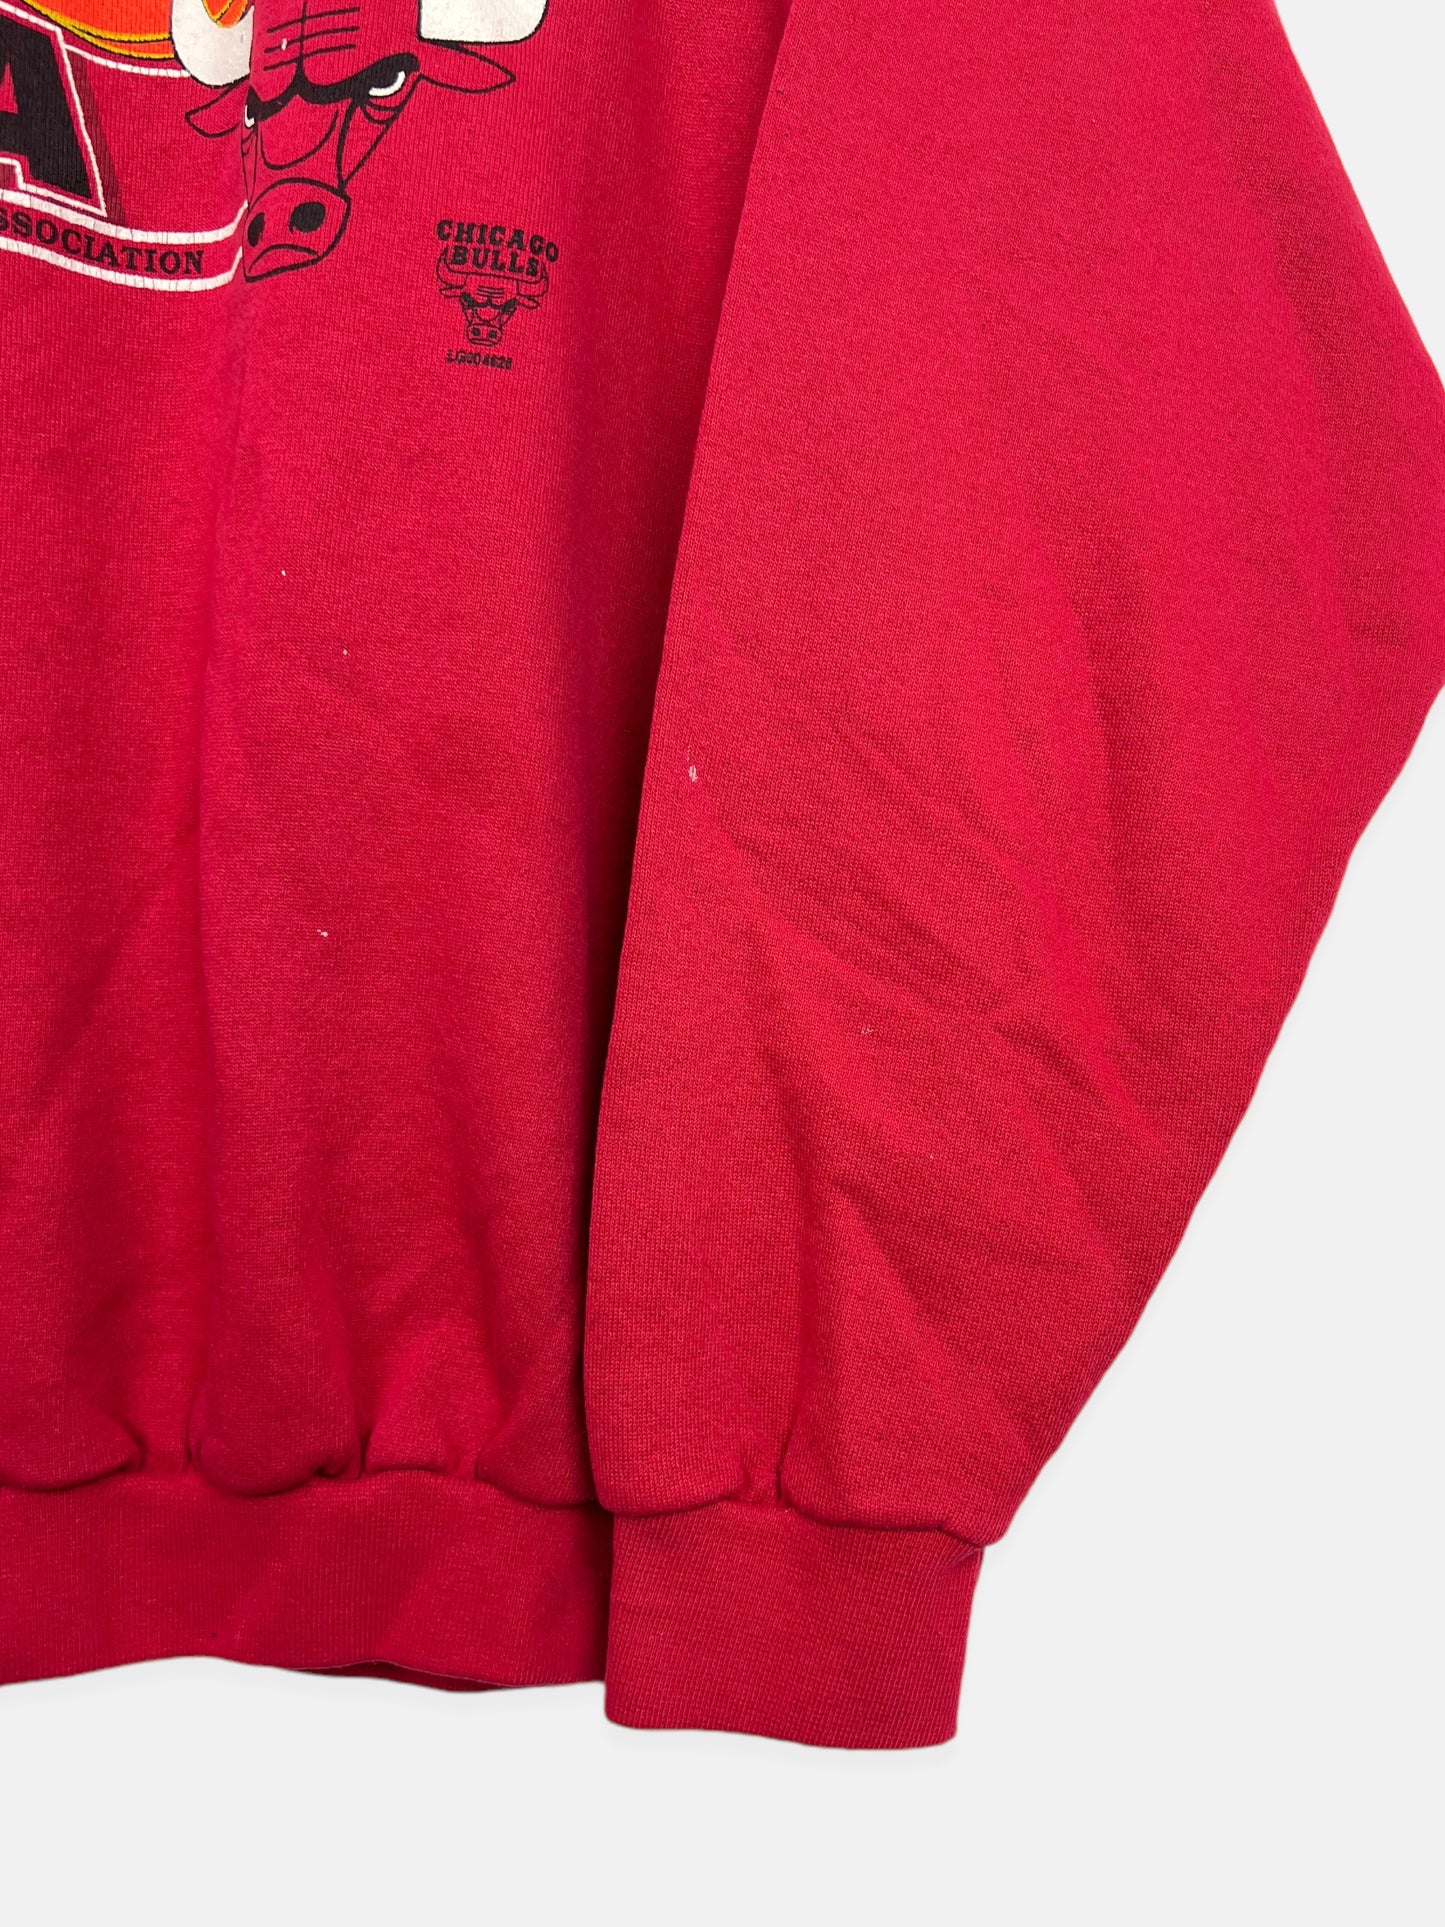 90's Chicago Bulls NBA Vintage Sweatshirt Size L-XL